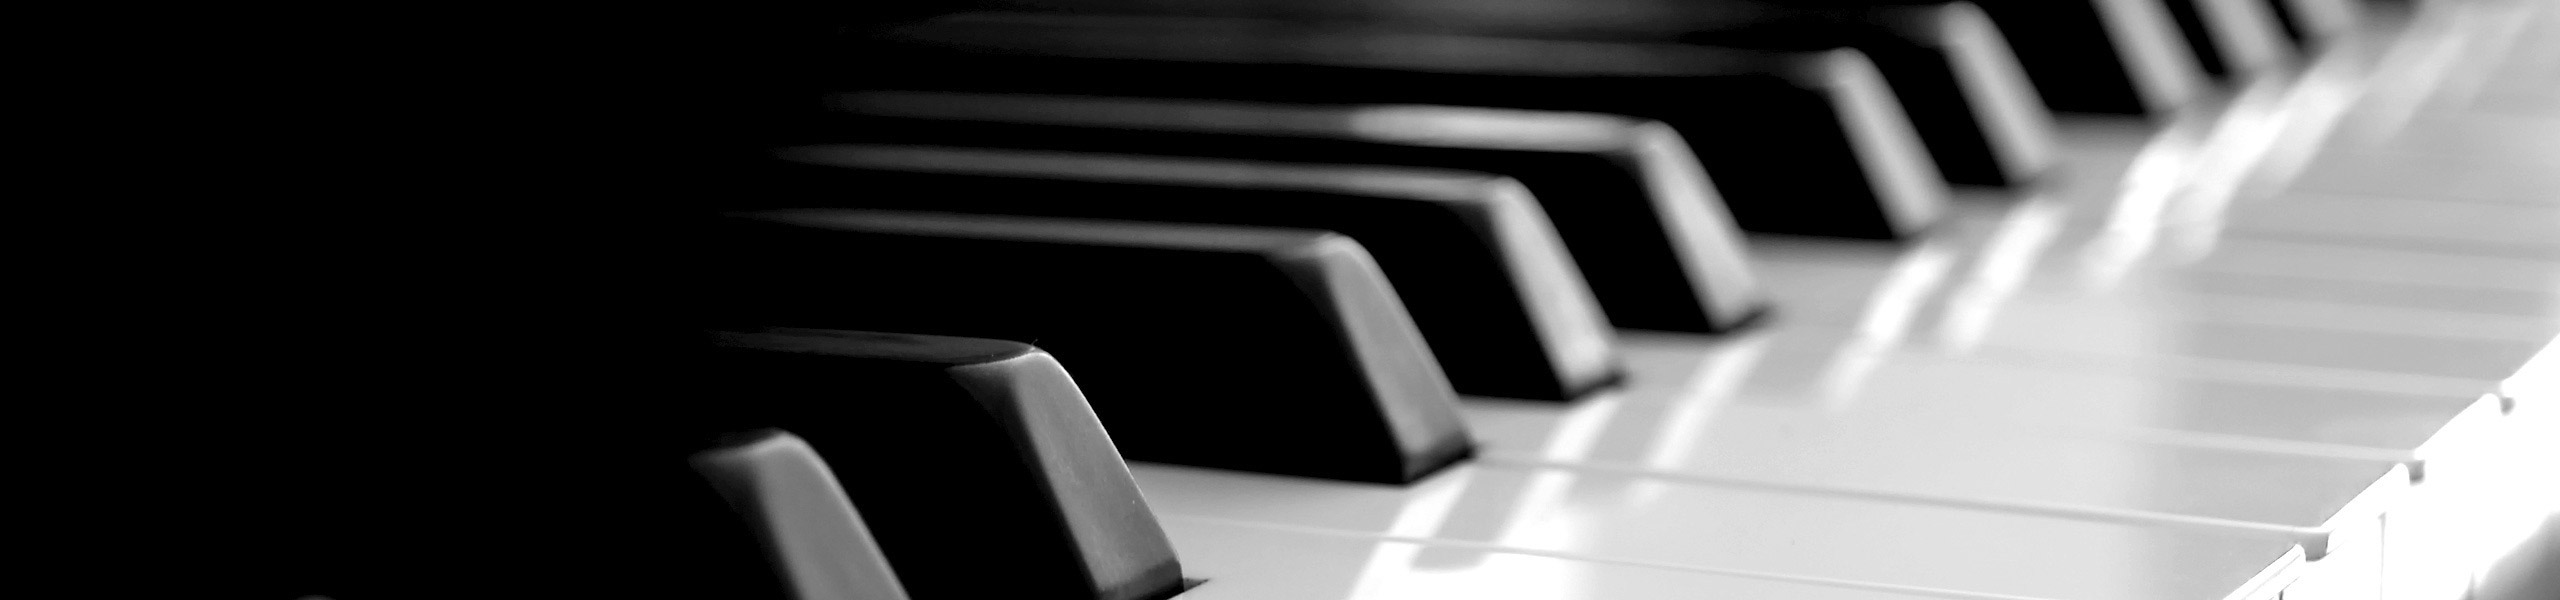 Piano Lessons - Goldston Music Studio